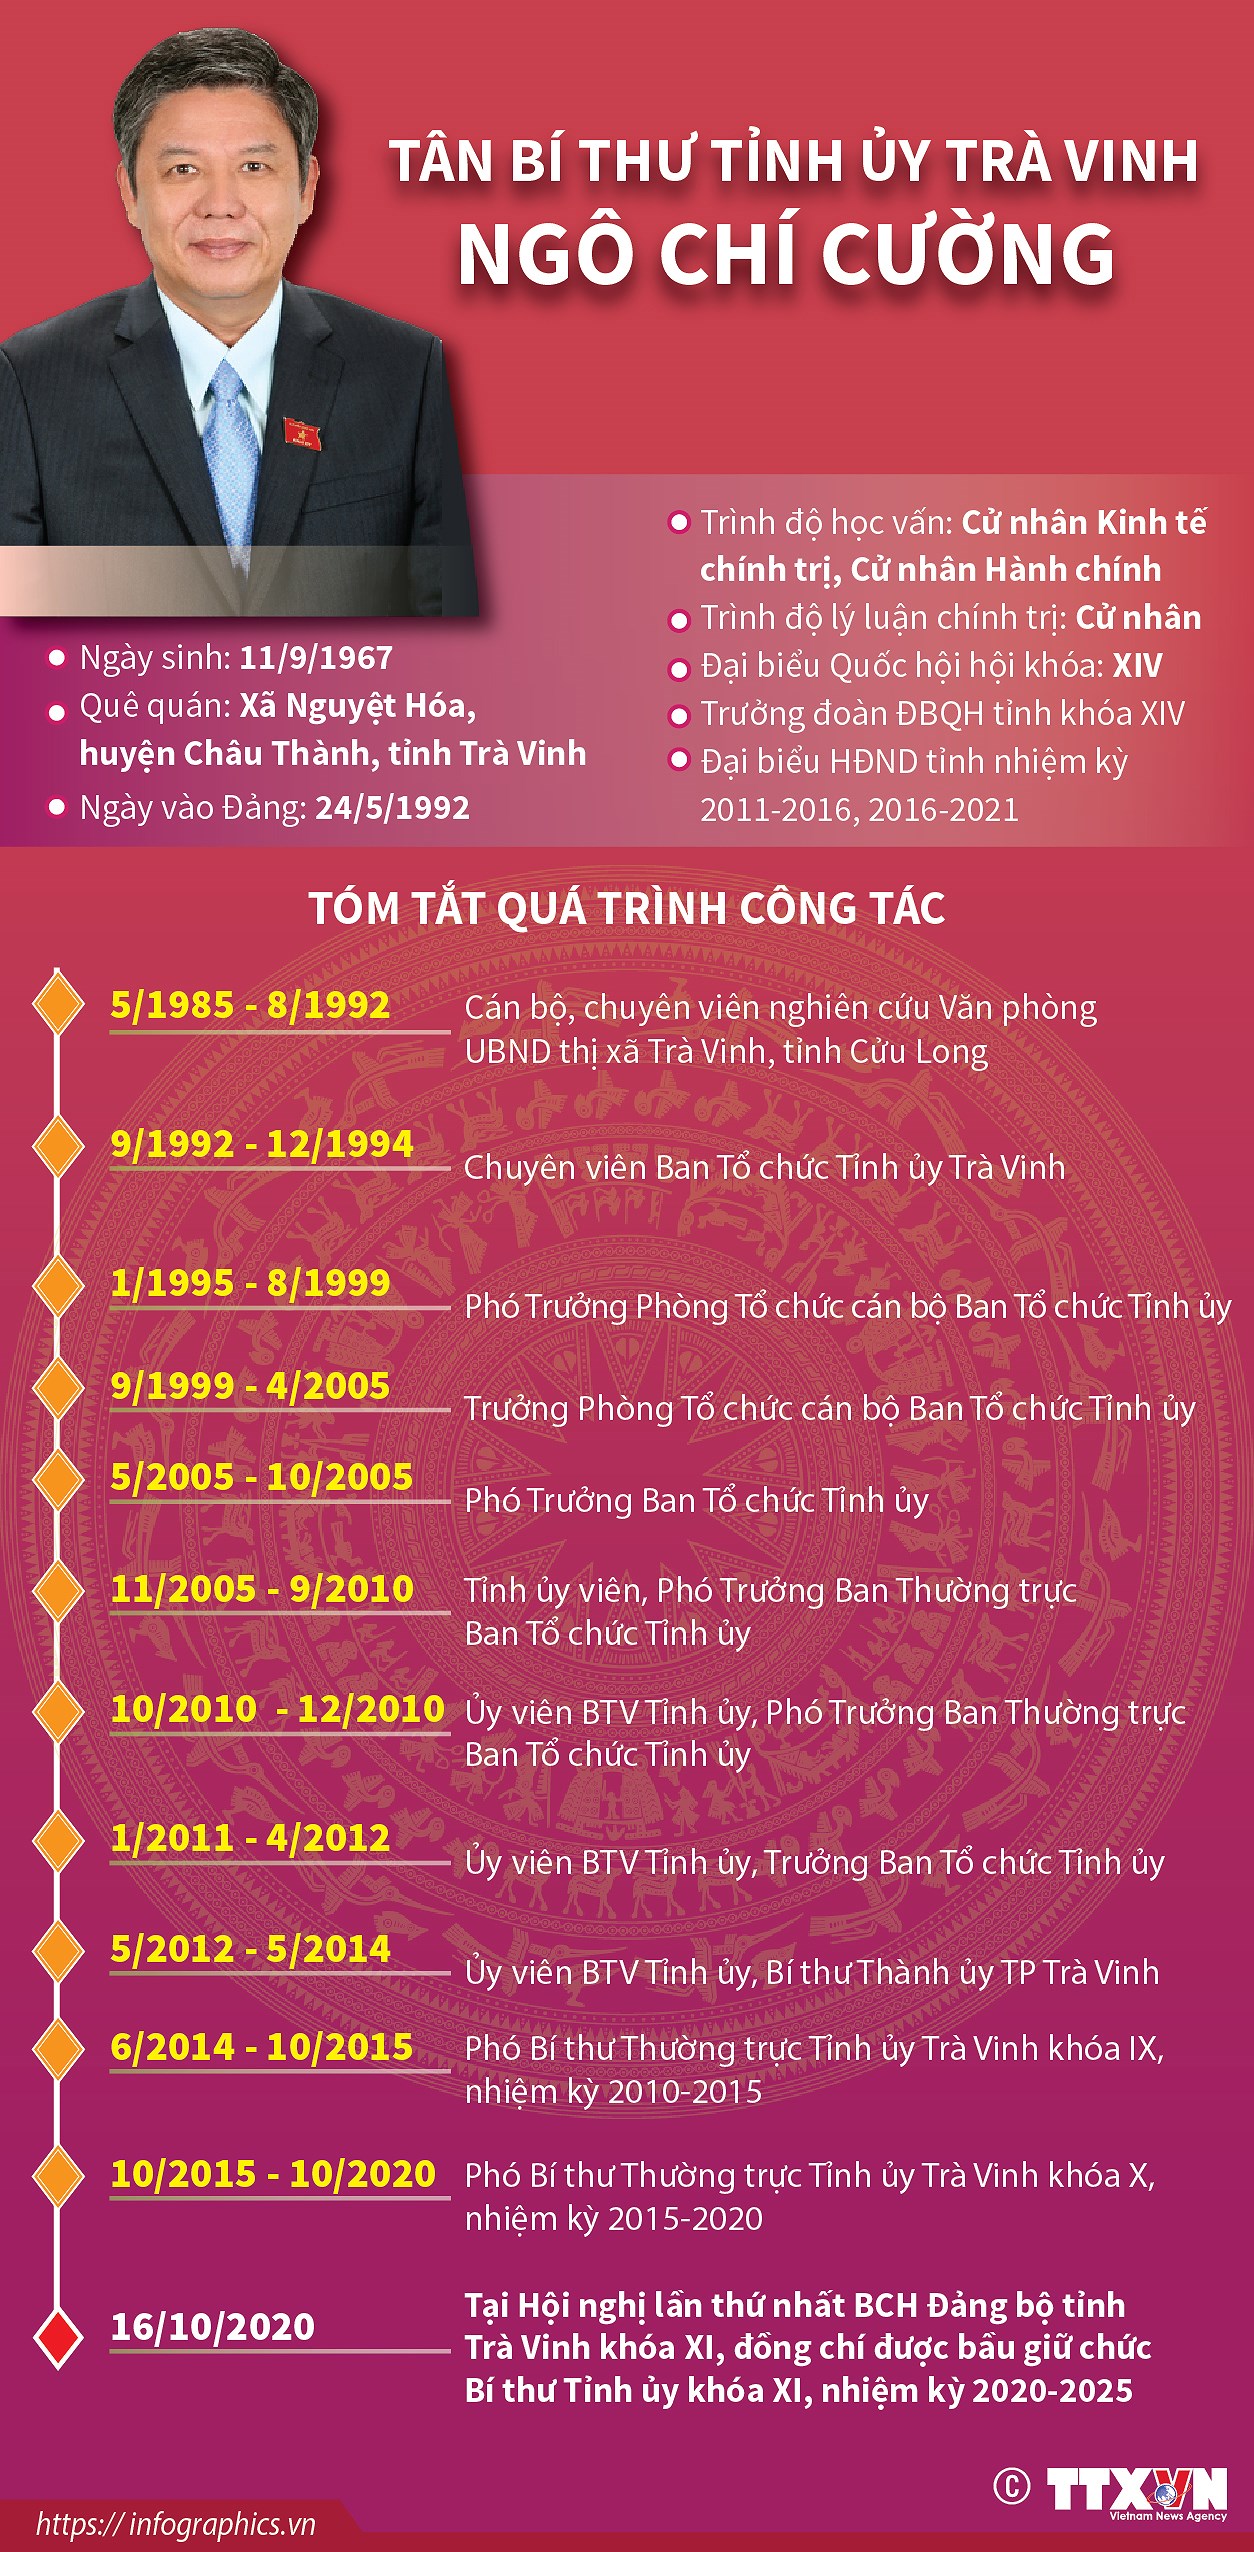 [Infographics] Tan Bi thu Tinh uy Tra Vinh Ngo Chi Cuong hinh anh 1